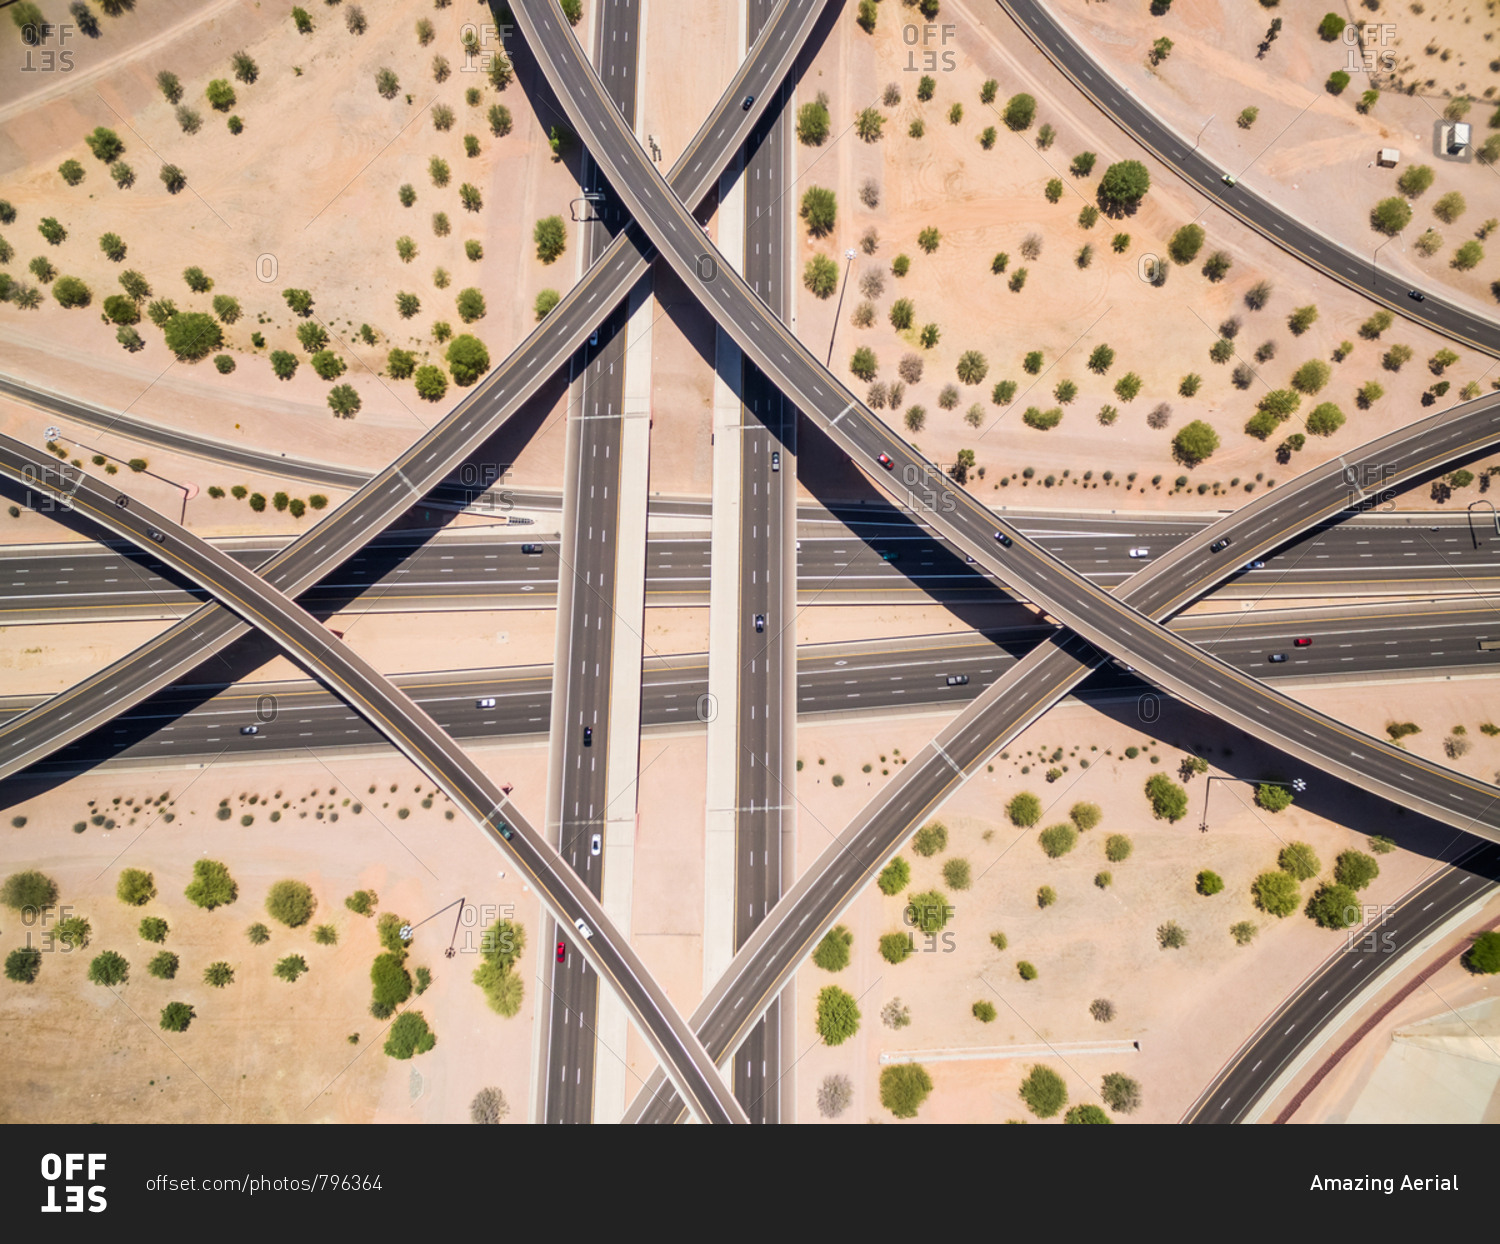 Aerial view of multi-lane road intersection on desert landscape, Las Vegas, USA.